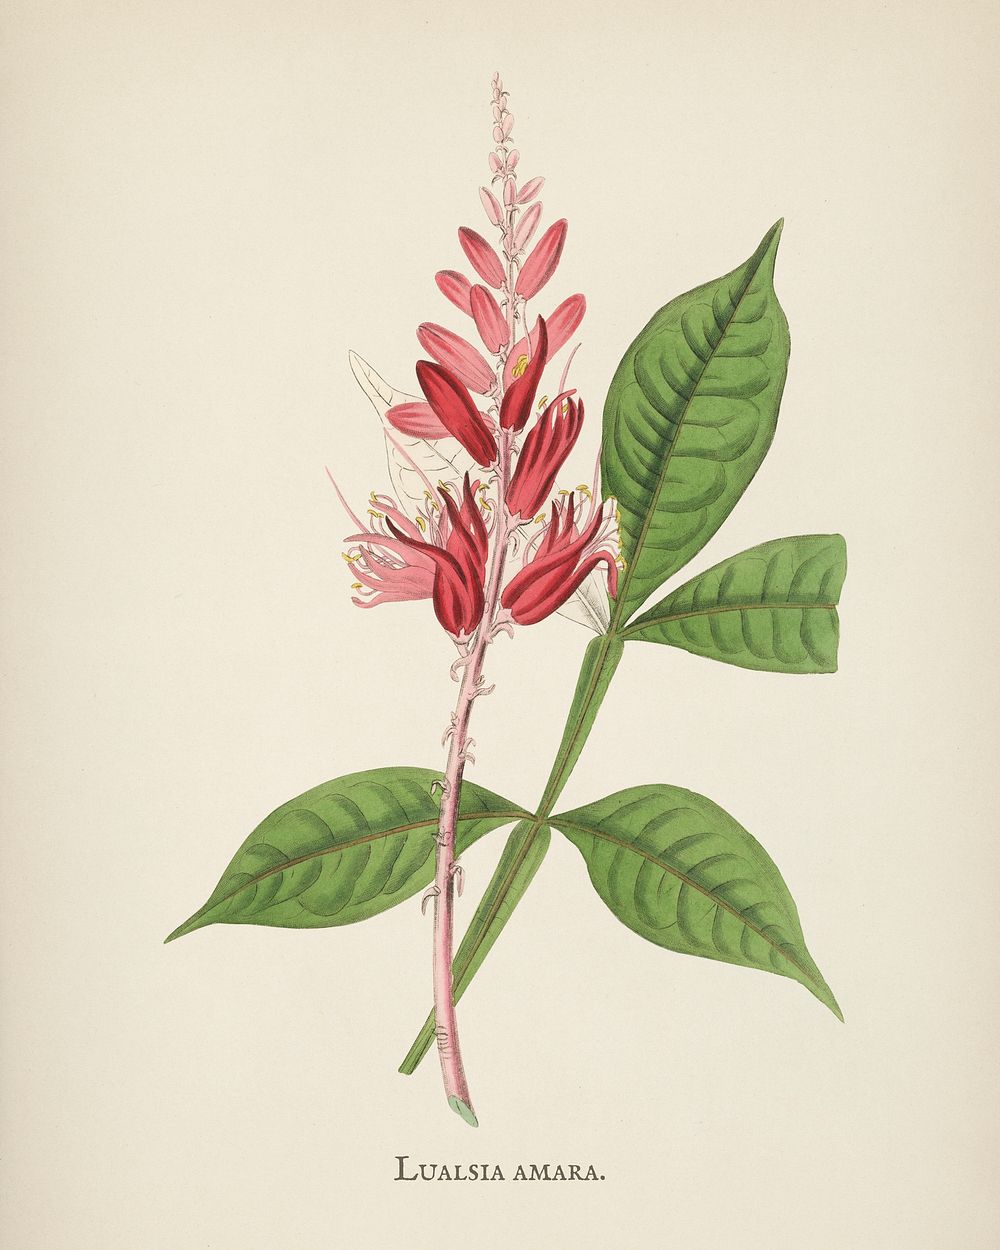 Lunasia amara illustration from Medical Botany (1836) by John Stephenson and James Morss Churchill.